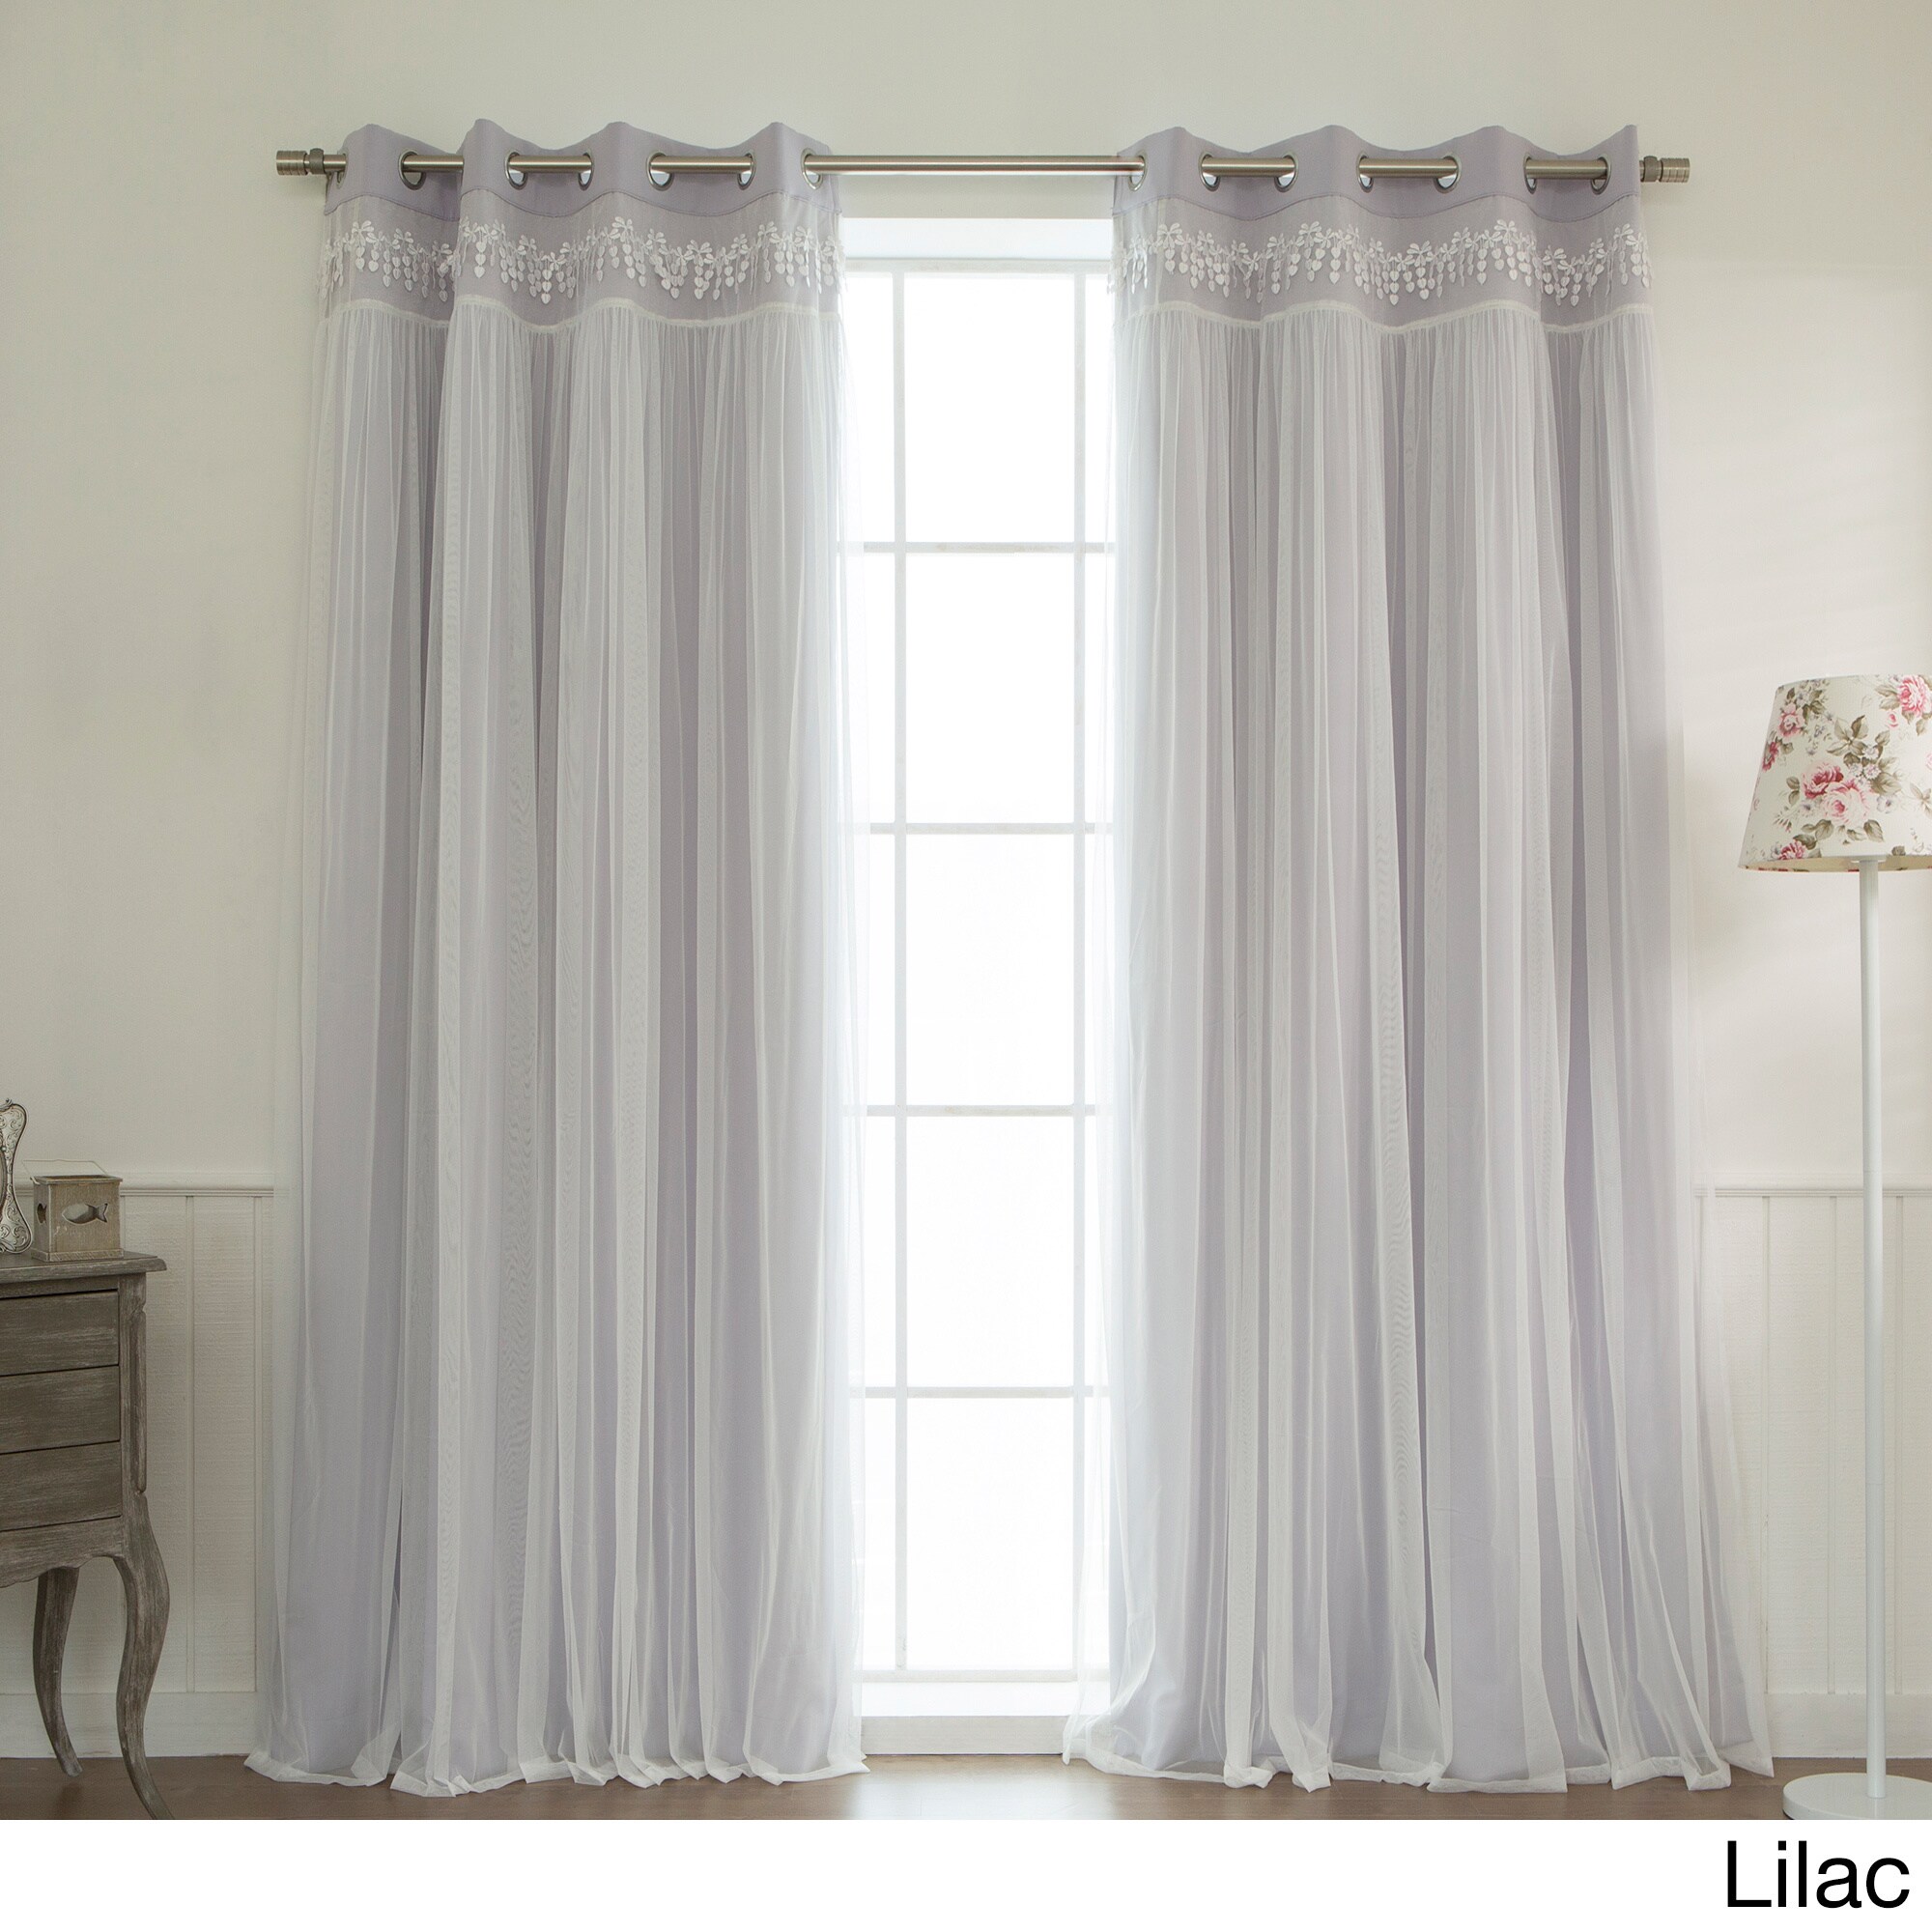 Aurora Home Lace Overlay Room Darkening Grommet Top Curtain Panel Pair  eBay